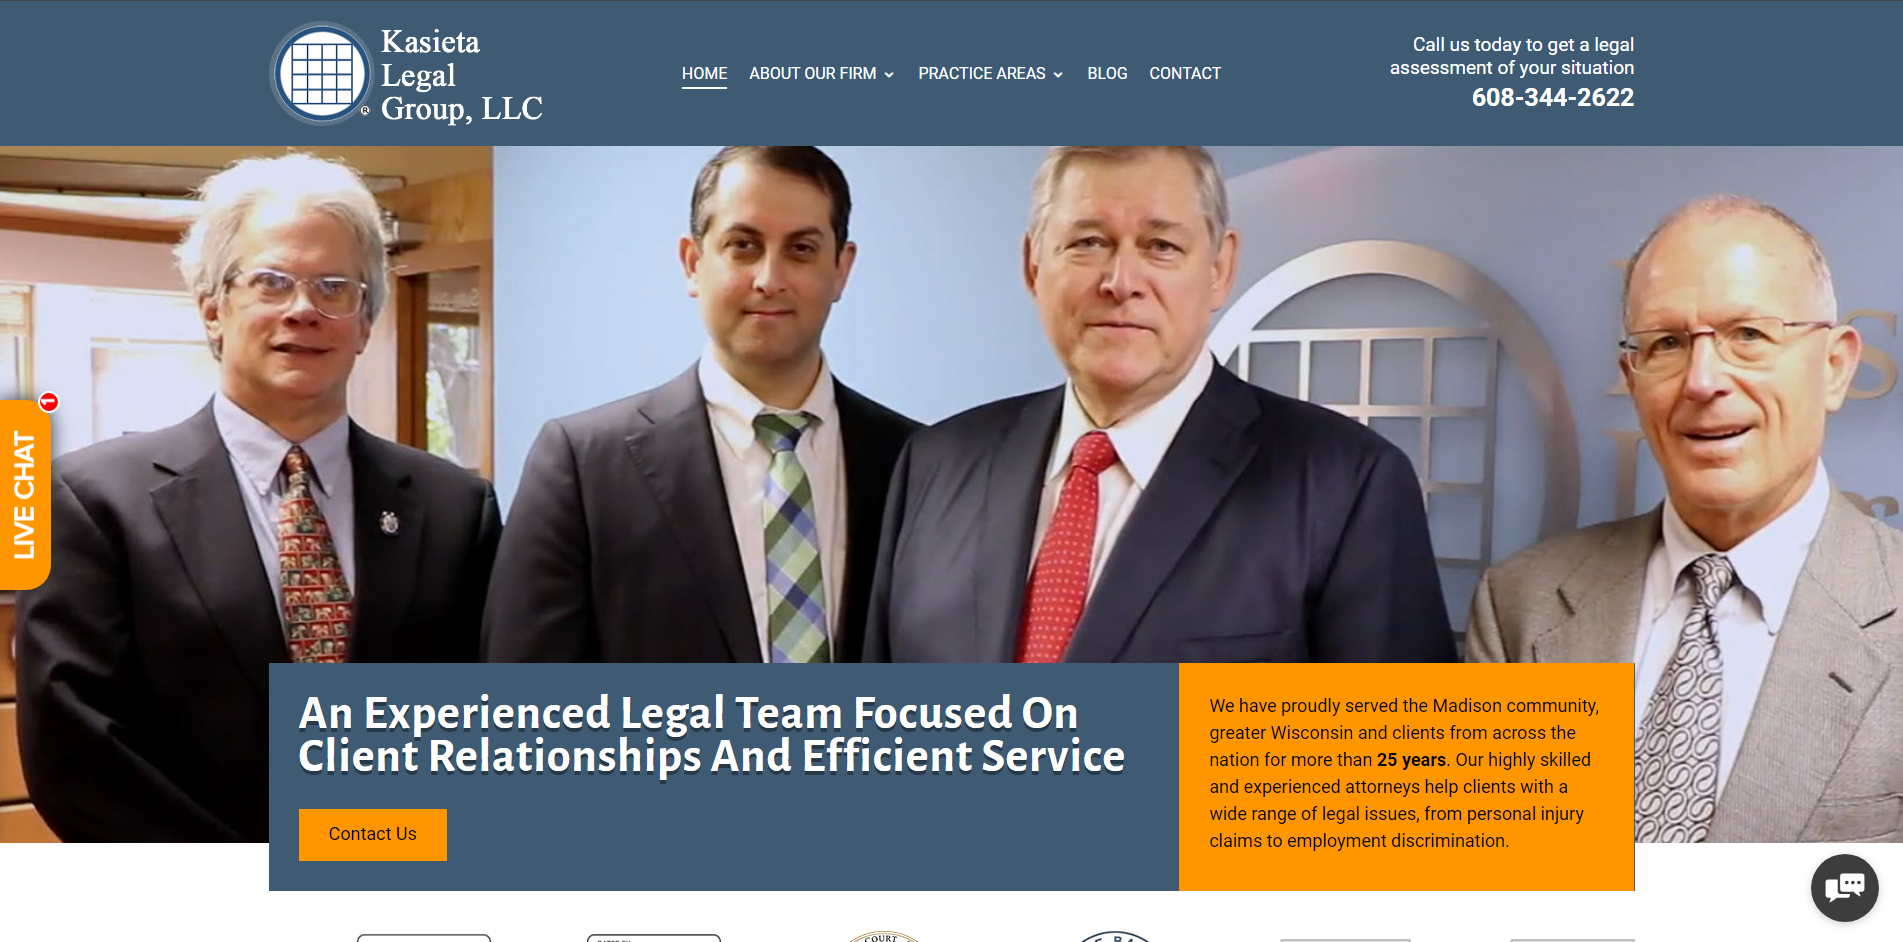 Kasieta Legal Group, LLC